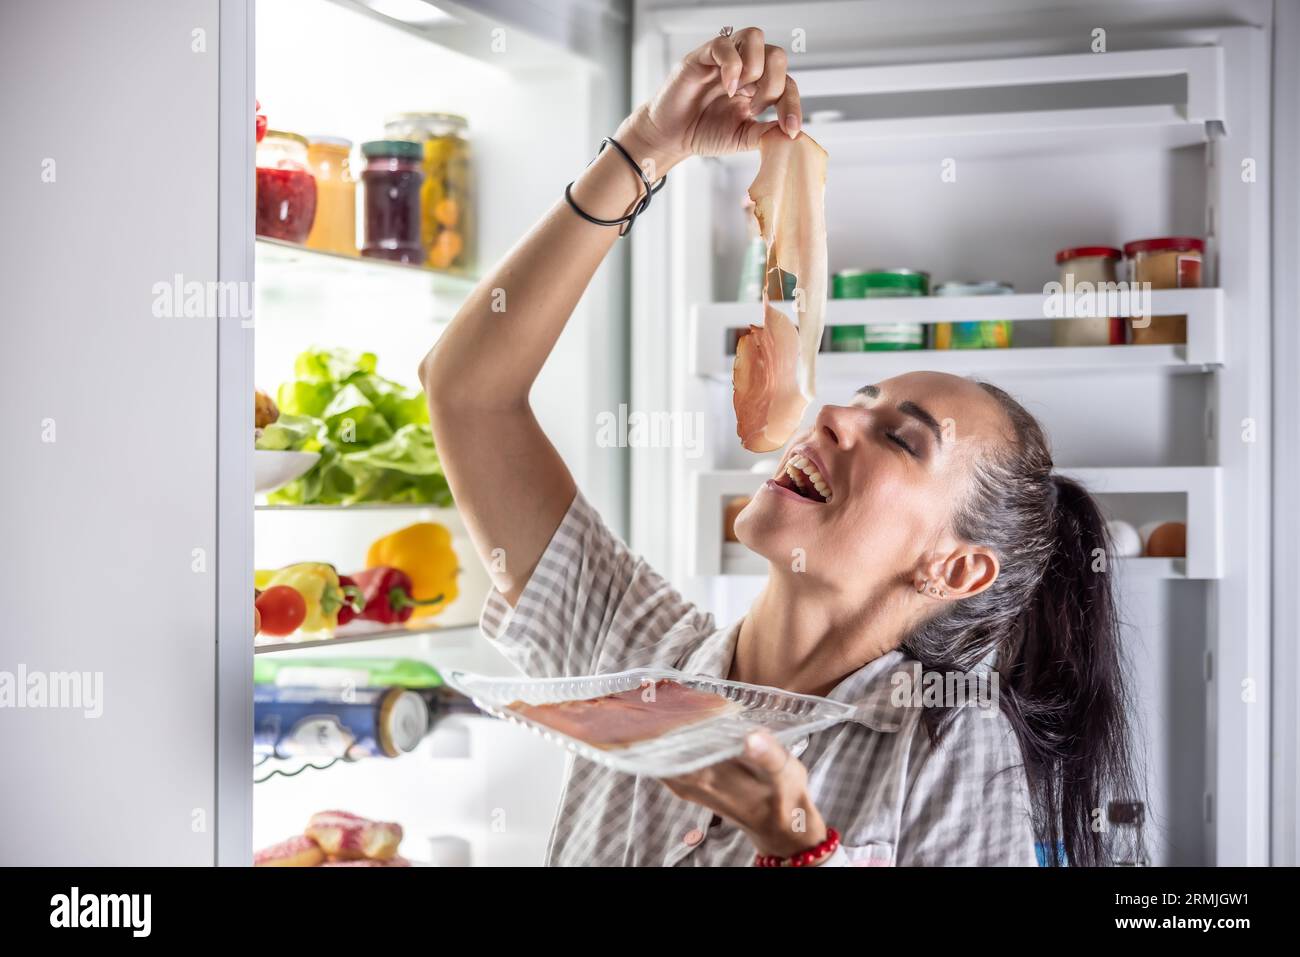 Sehr hungrige Frau im Pyjama, die abends am Kühlschrank Prosciutto genießt. Stockfoto